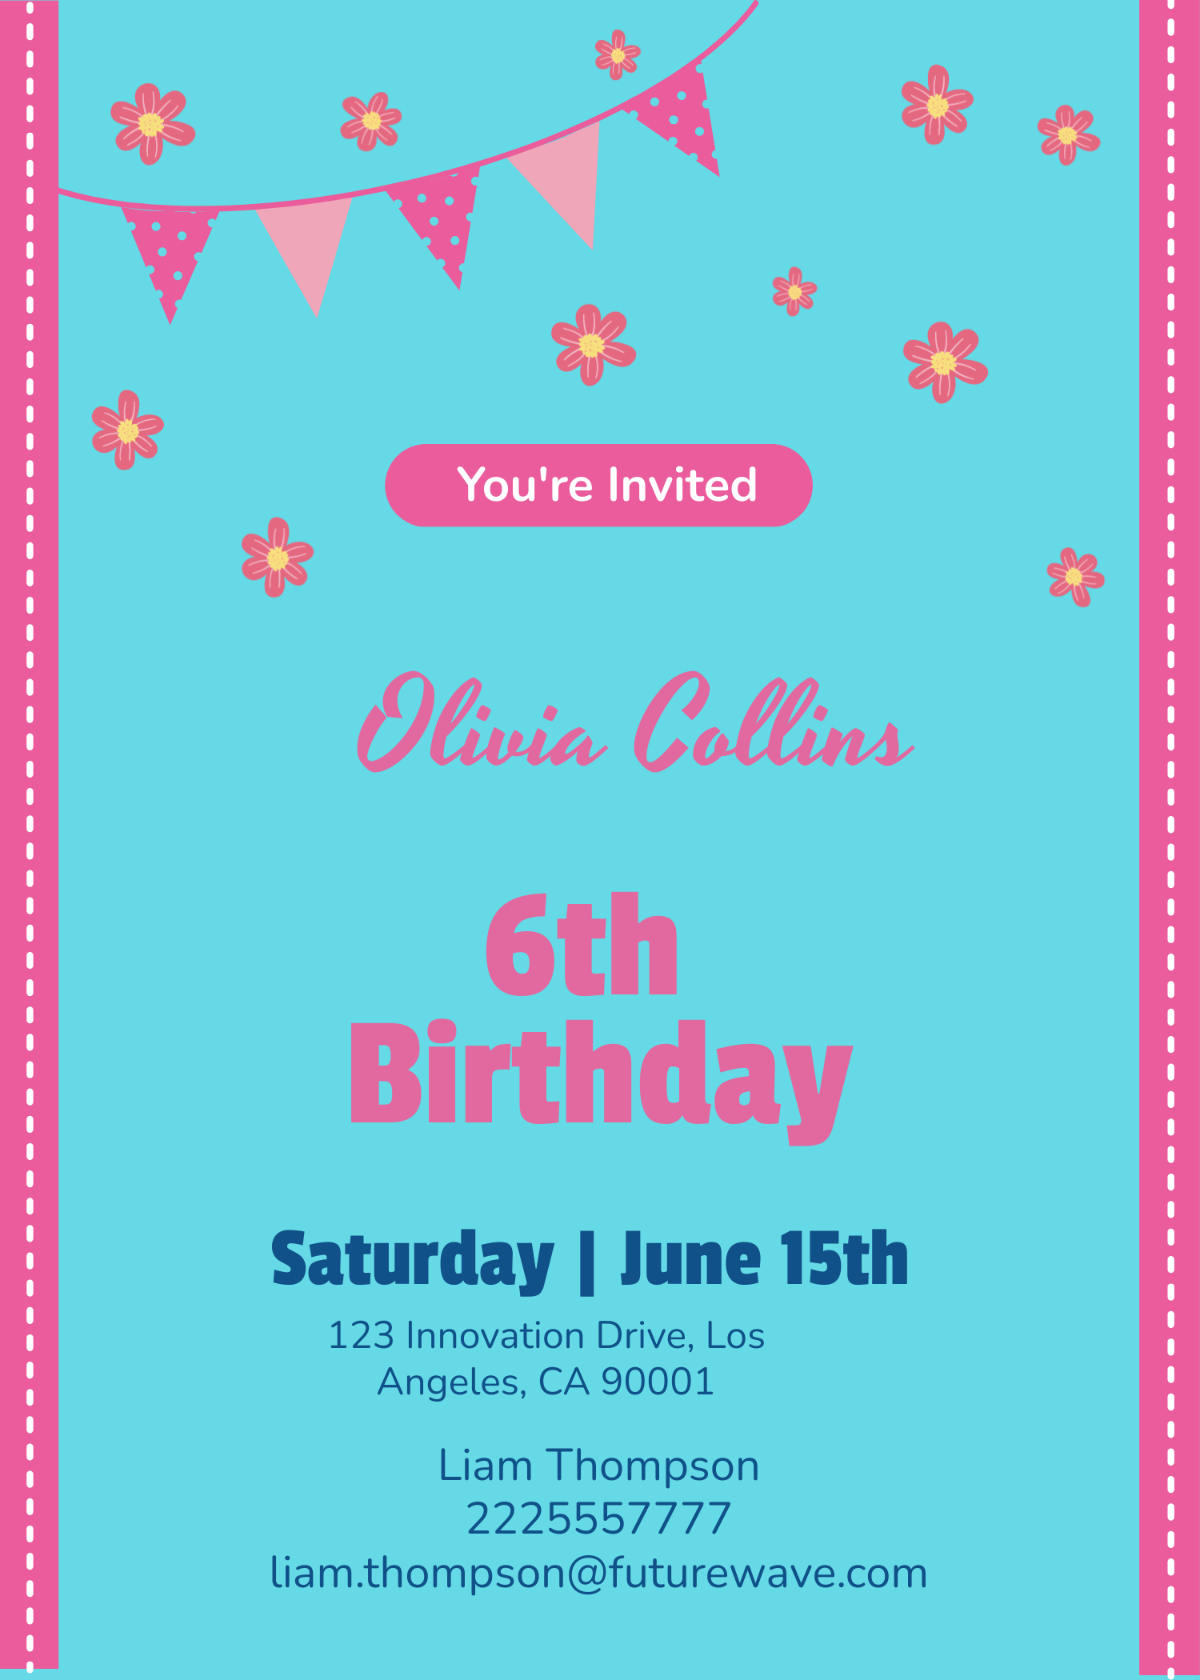 Barbie Birthday Invitation